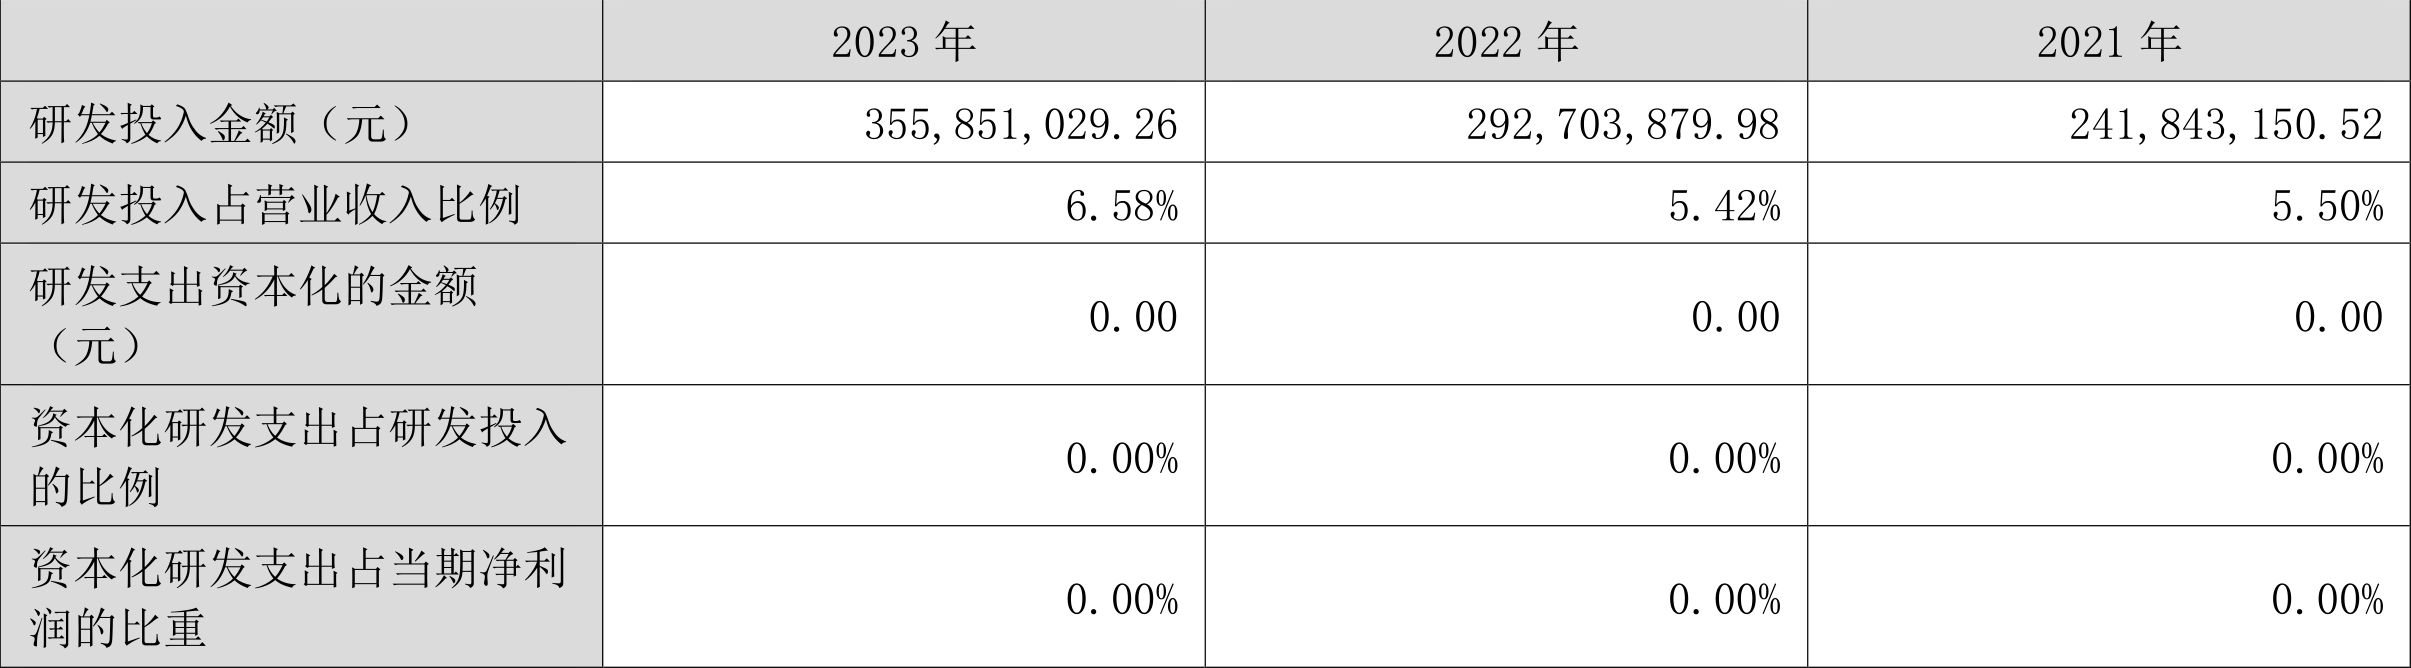 扬杰科技：2023年净利9.24亿元 同比下降12.85%